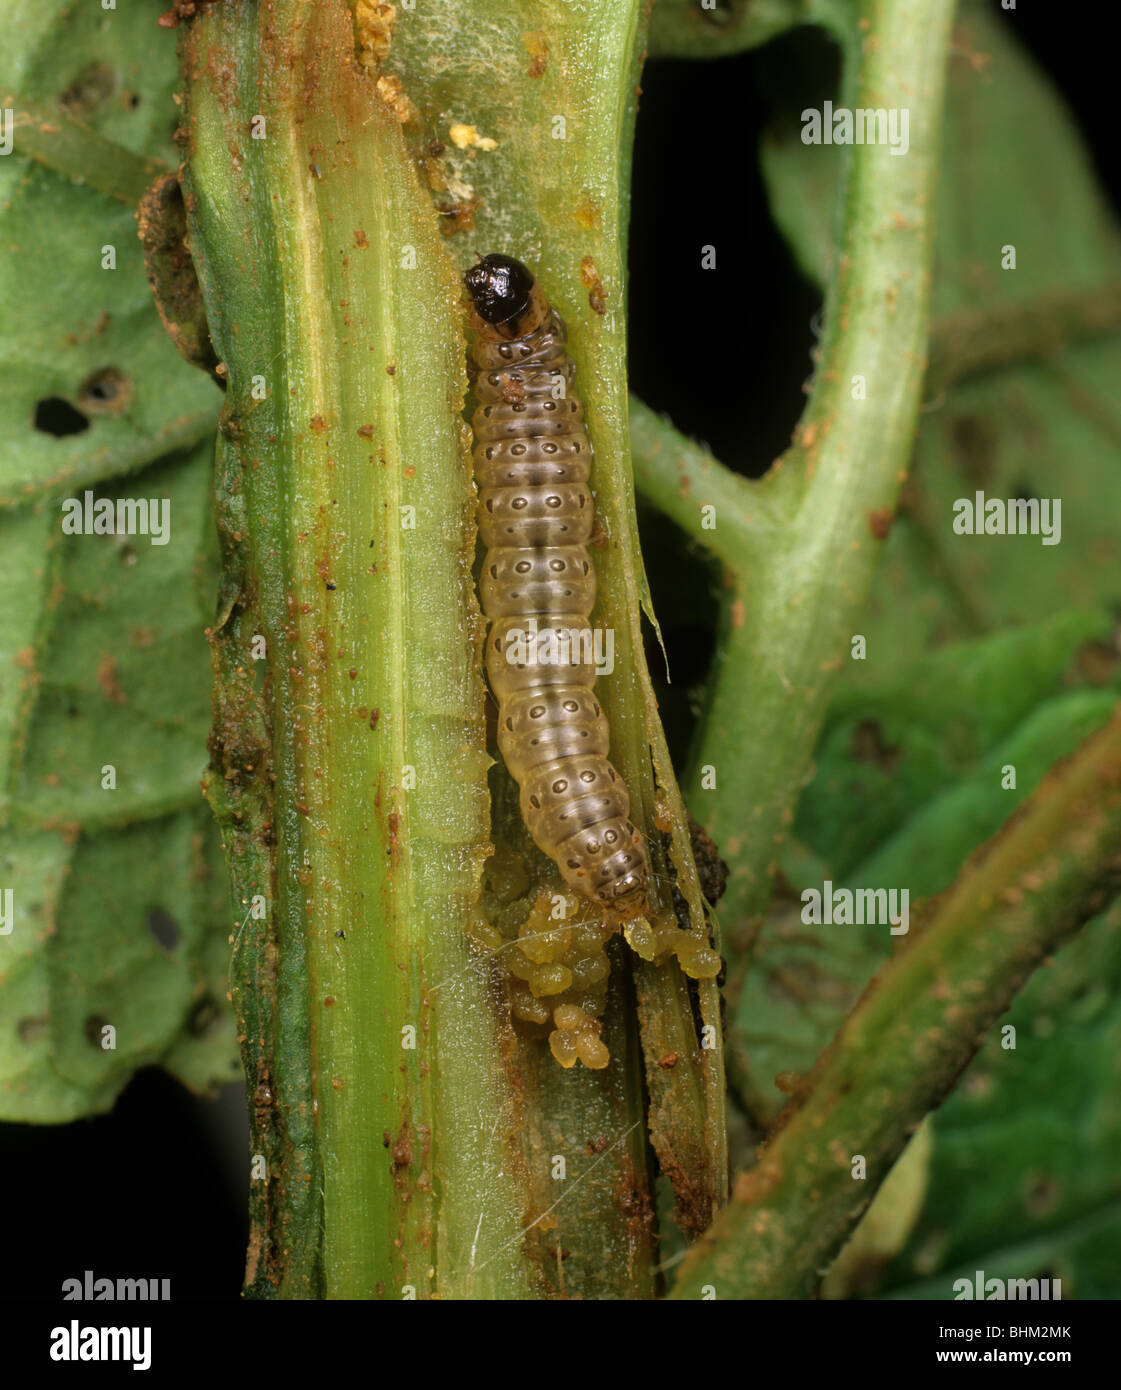 European corn borer (Ostrinia nubialis) caterpillar in damaged stem Stock Photo